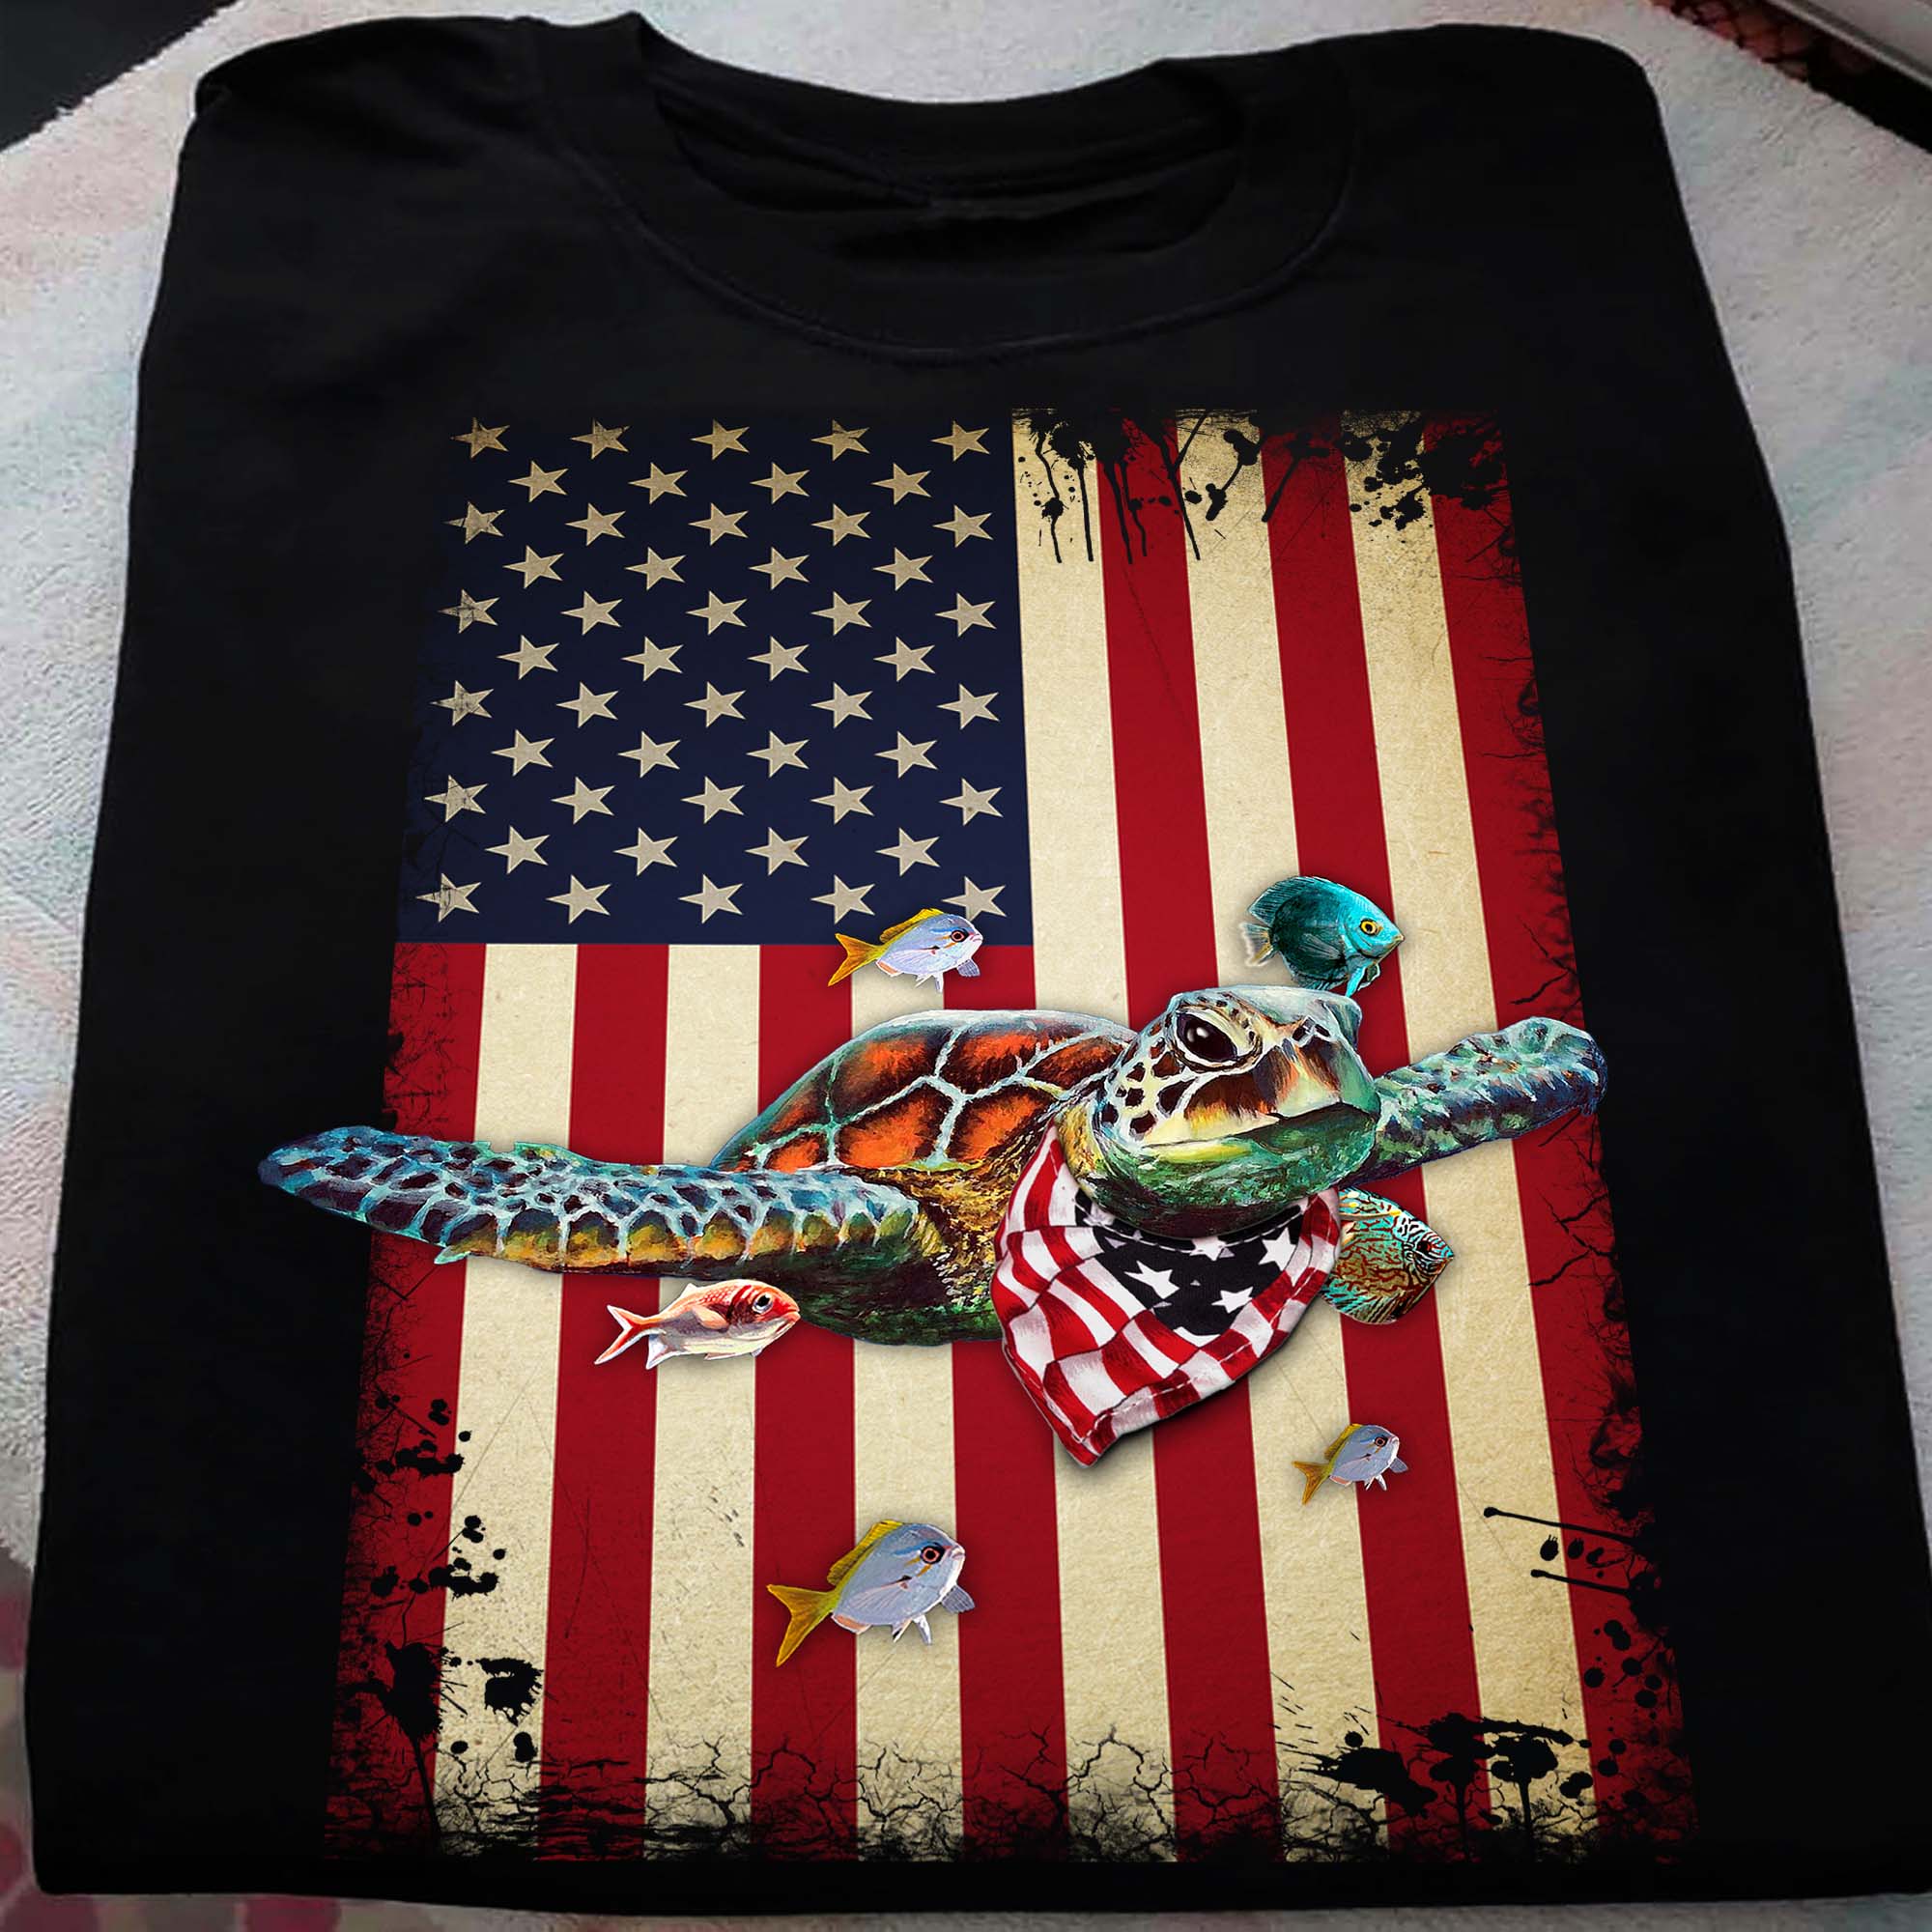 America flag - Turtle and america flag